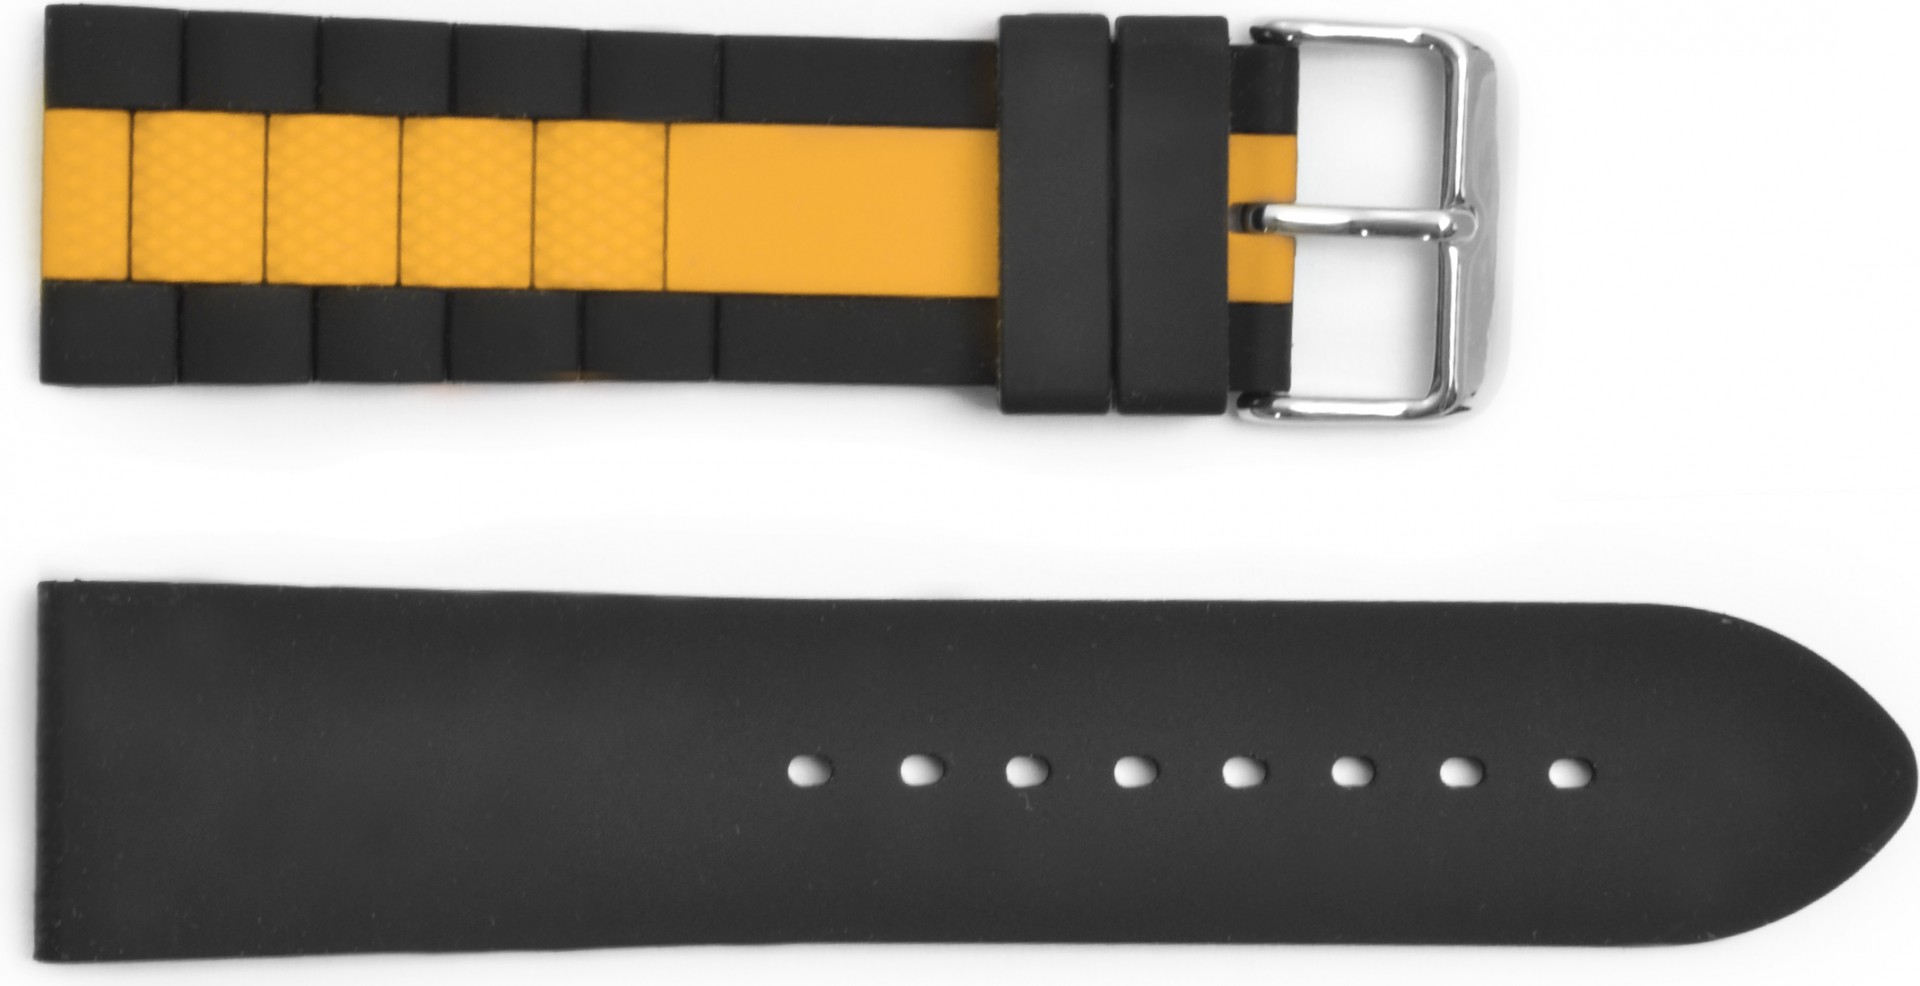   Uhrenarmband Explorer Dornschließe - Silikon - schwarz/gelb ohne Naht 